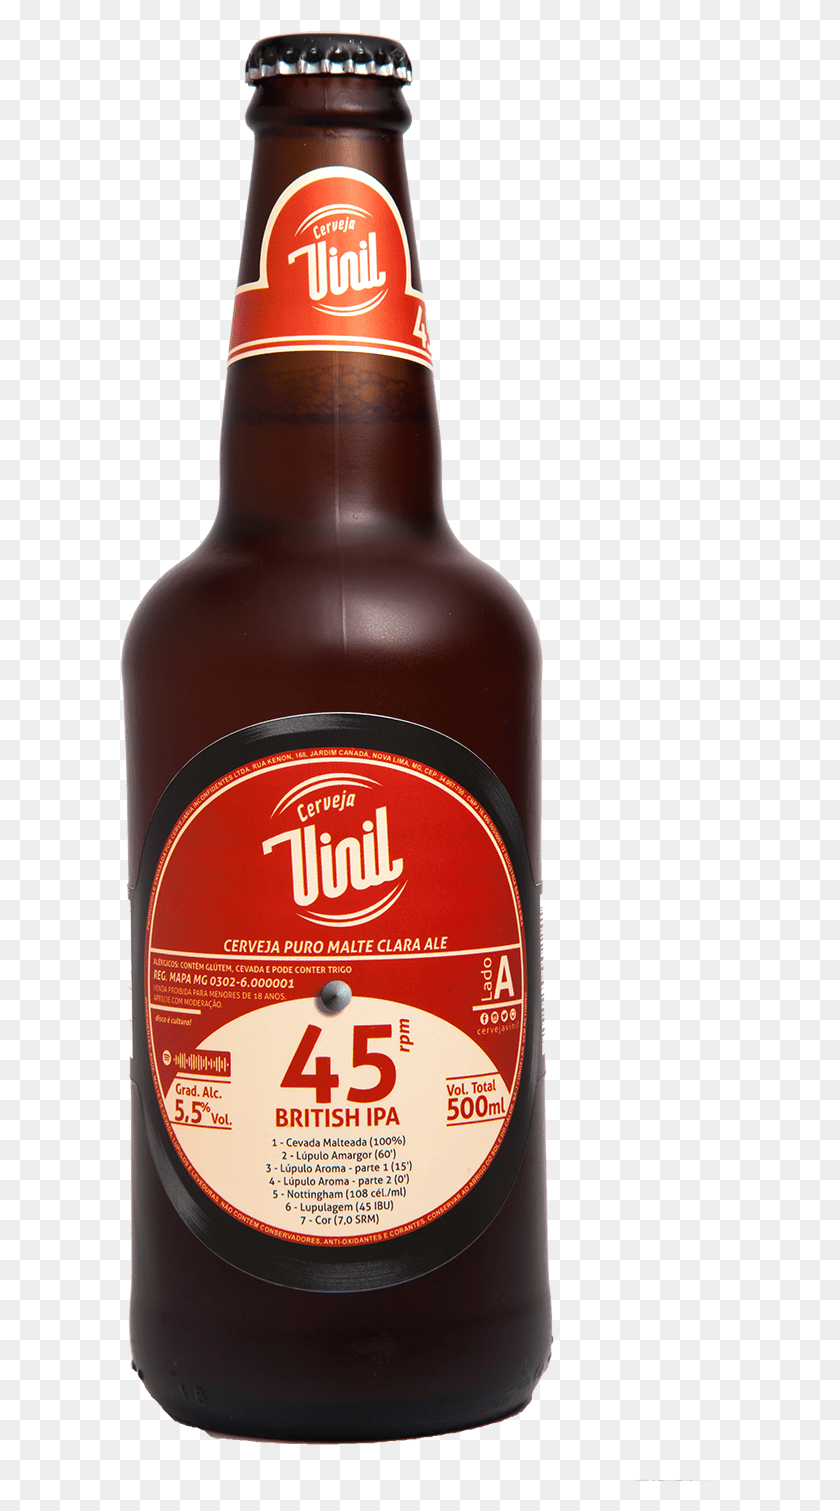 600x1451 Descargar Png Vinil 45 Rpm Thb Bire Malgache, Cerveza, Alcohol, Bebida Hd Png